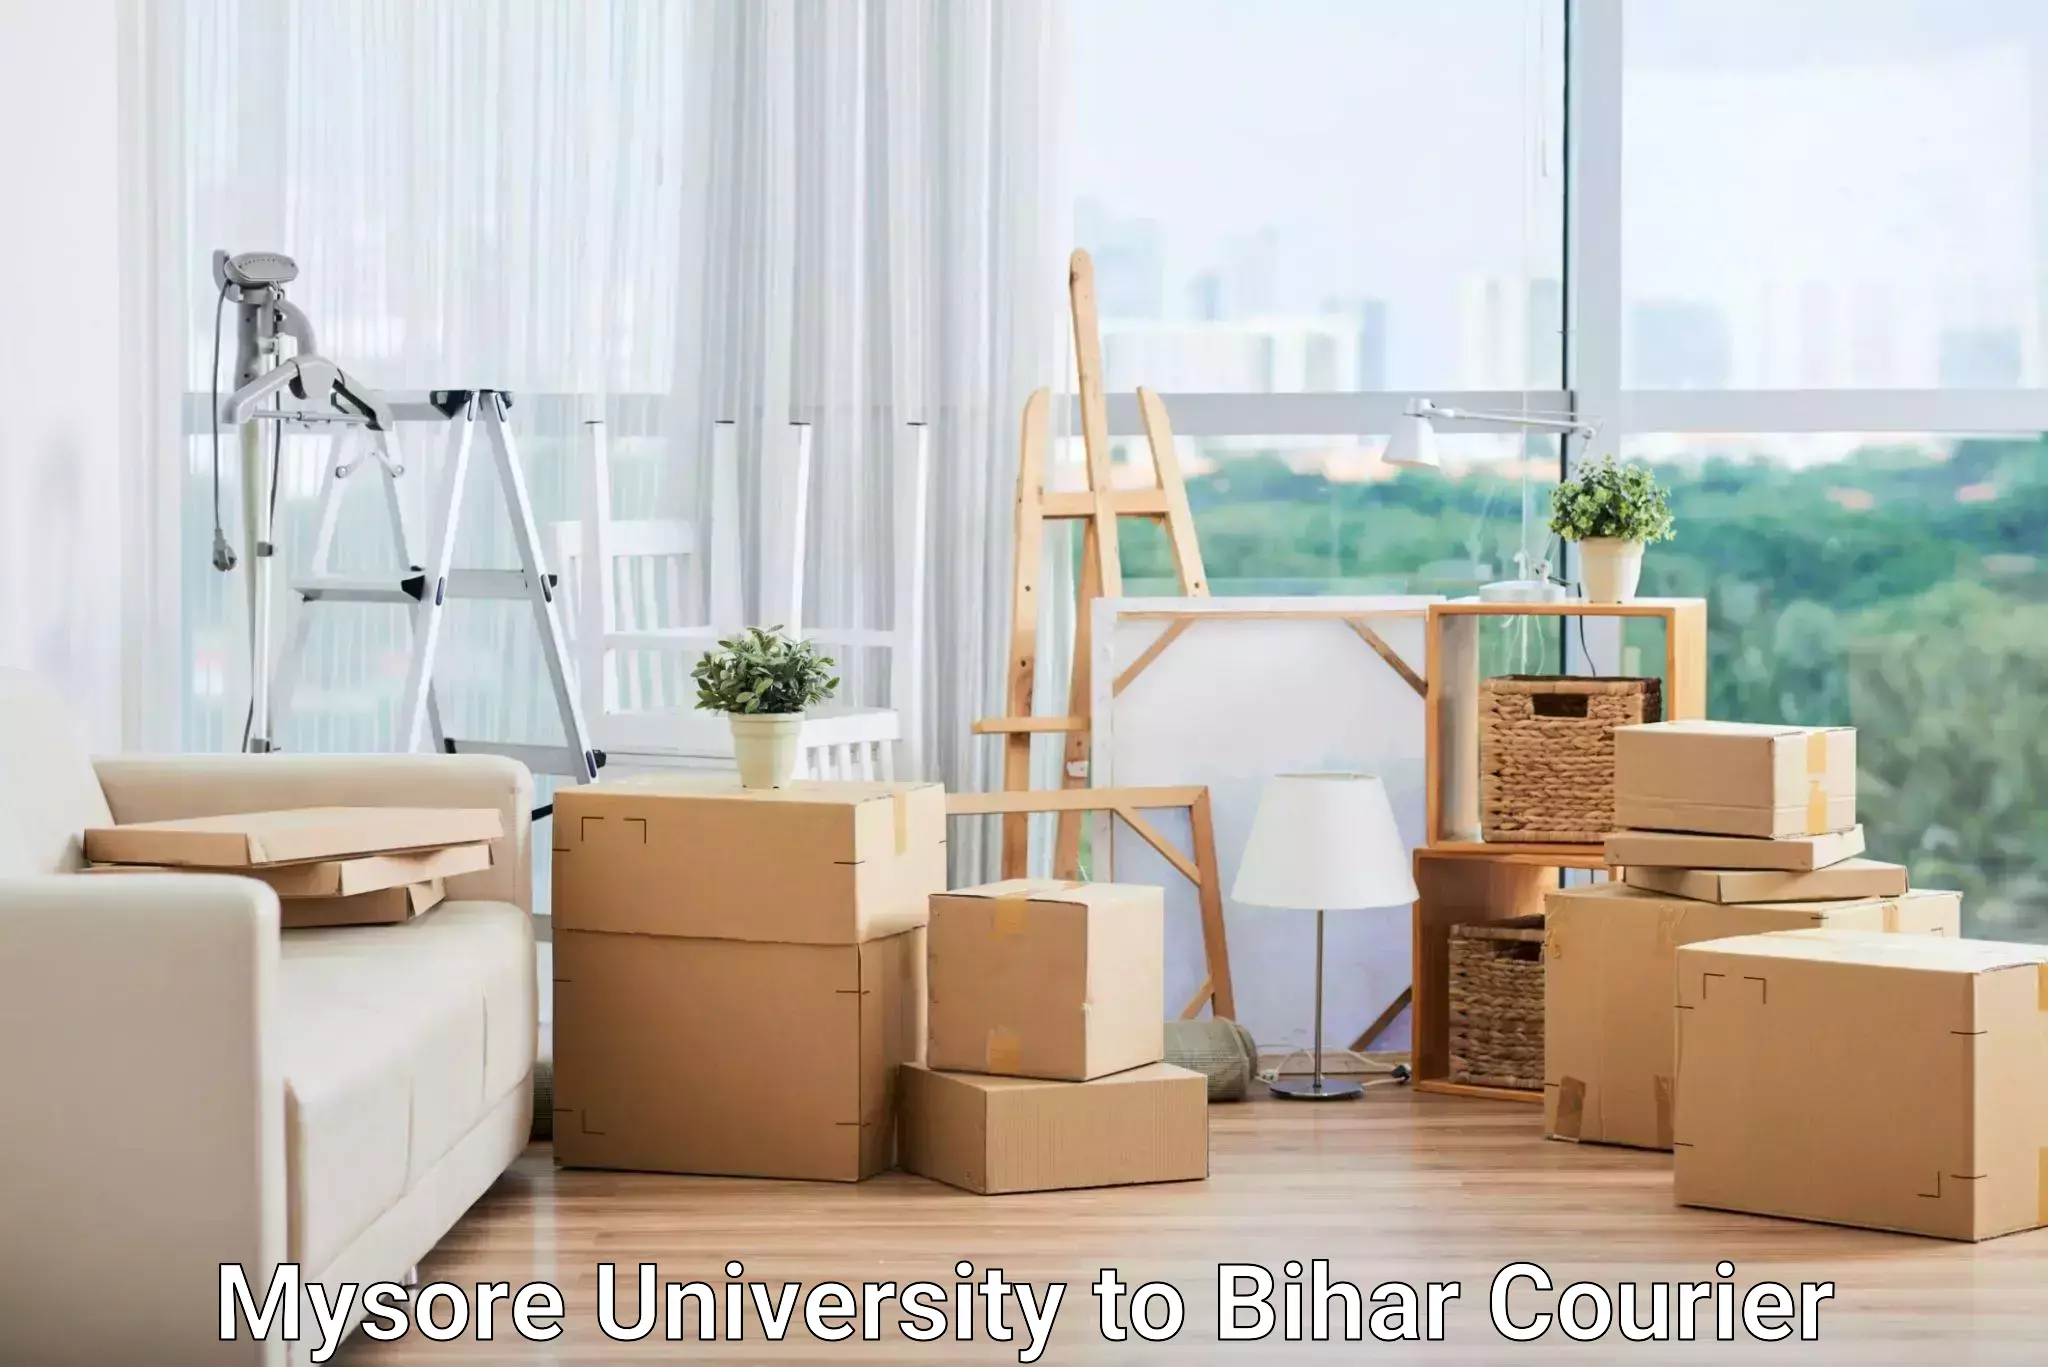 Bulk courier orders Mysore University to Dumraon